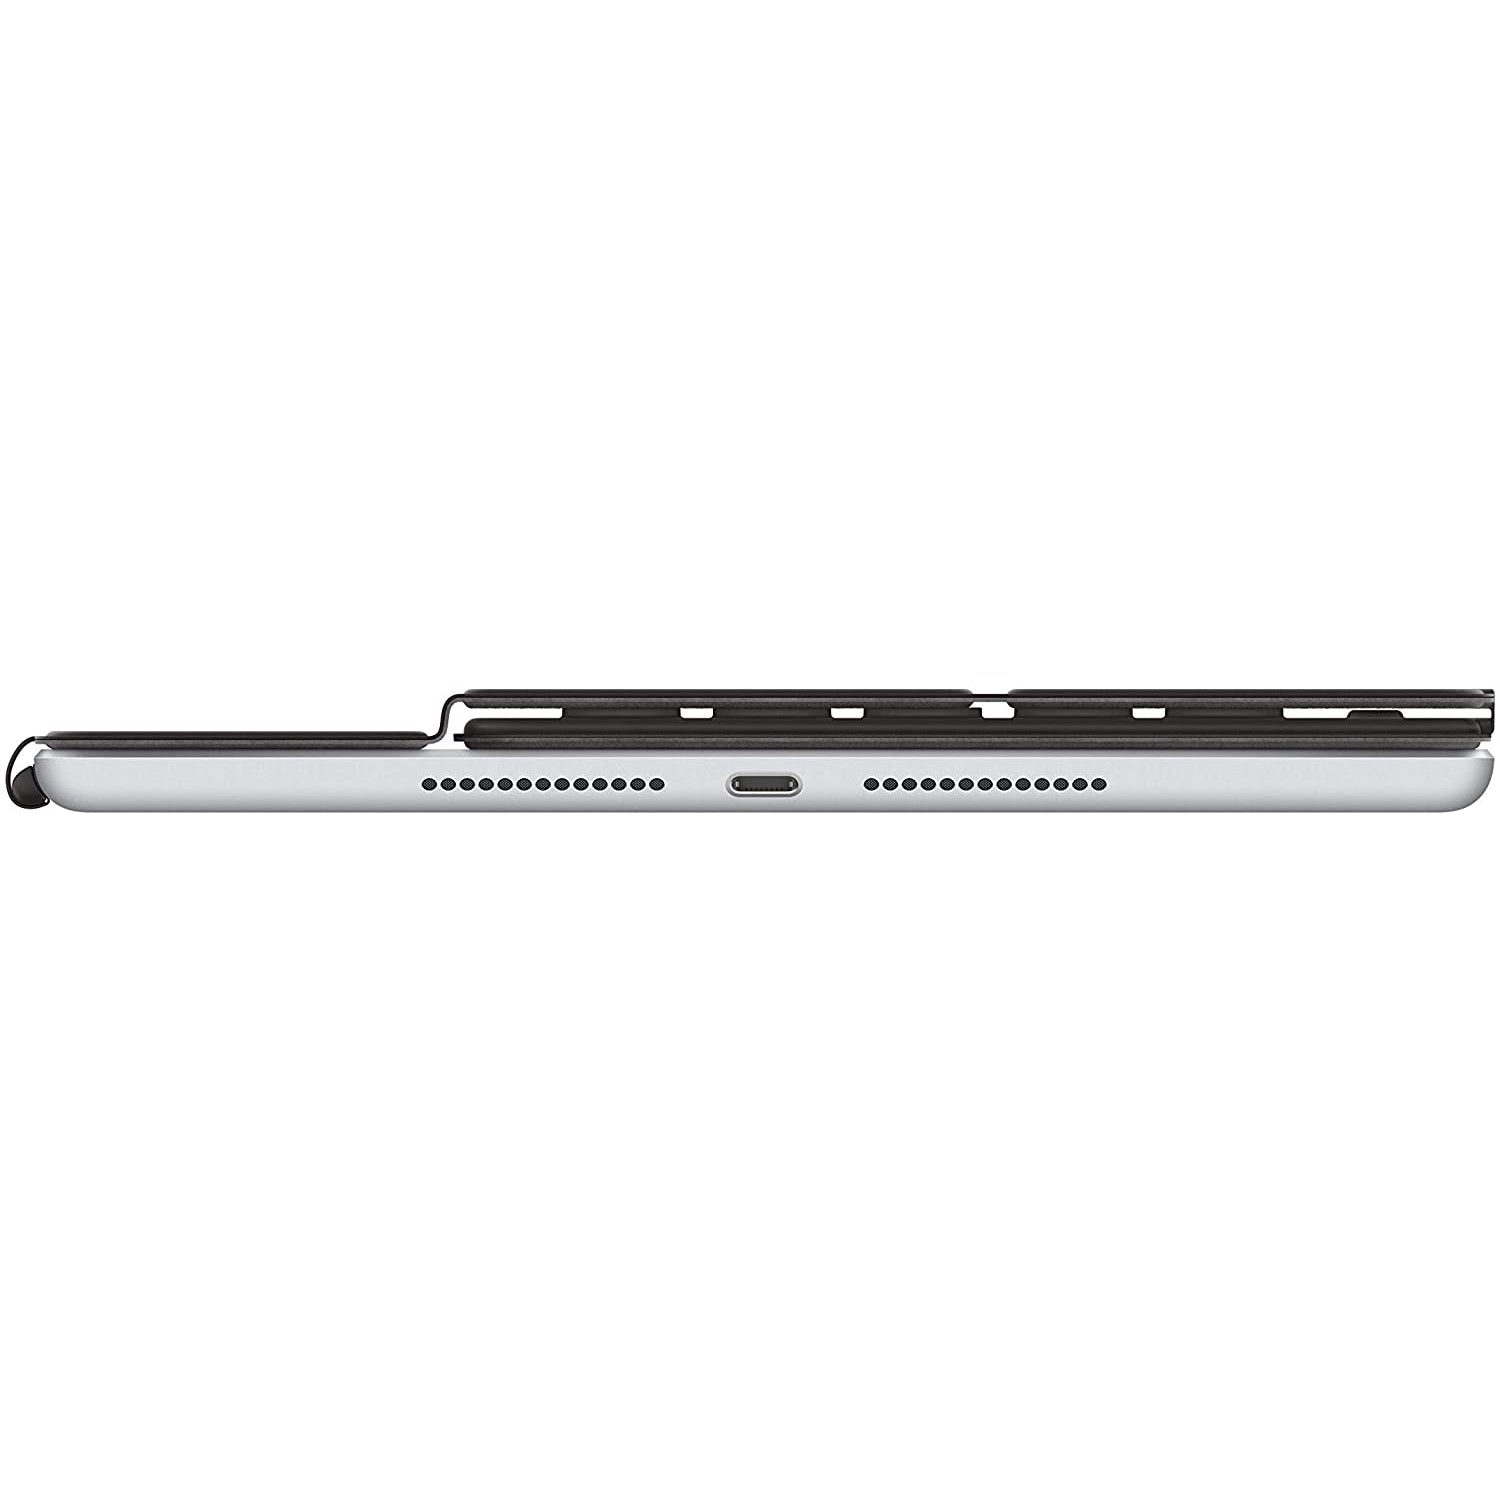 Apple Smart Keyboard MX3L2B/A for 10.5" iPads - Black - Refurbished Good